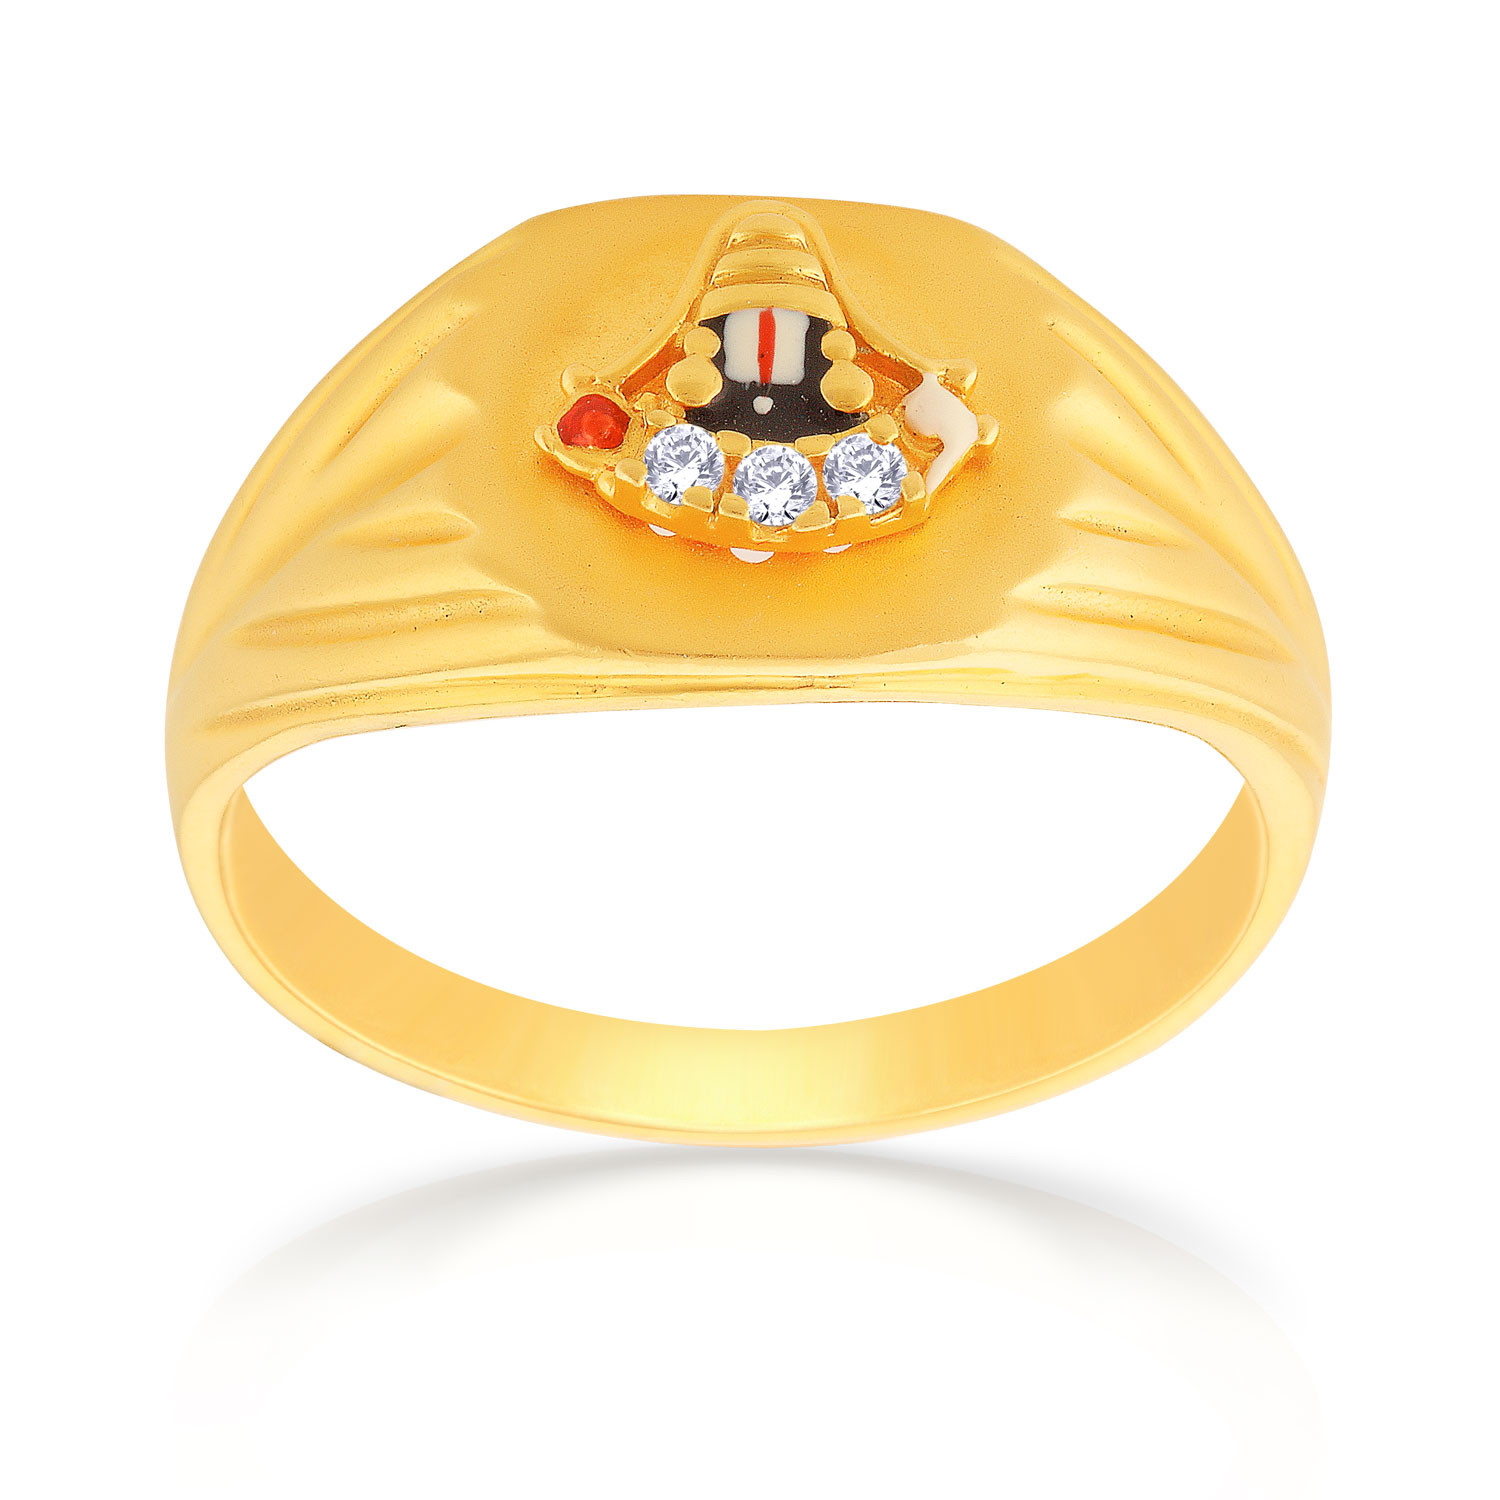 Gold Toe Ring | Toe Rings| Love Knot Adjustable toe ring | Gift for Women